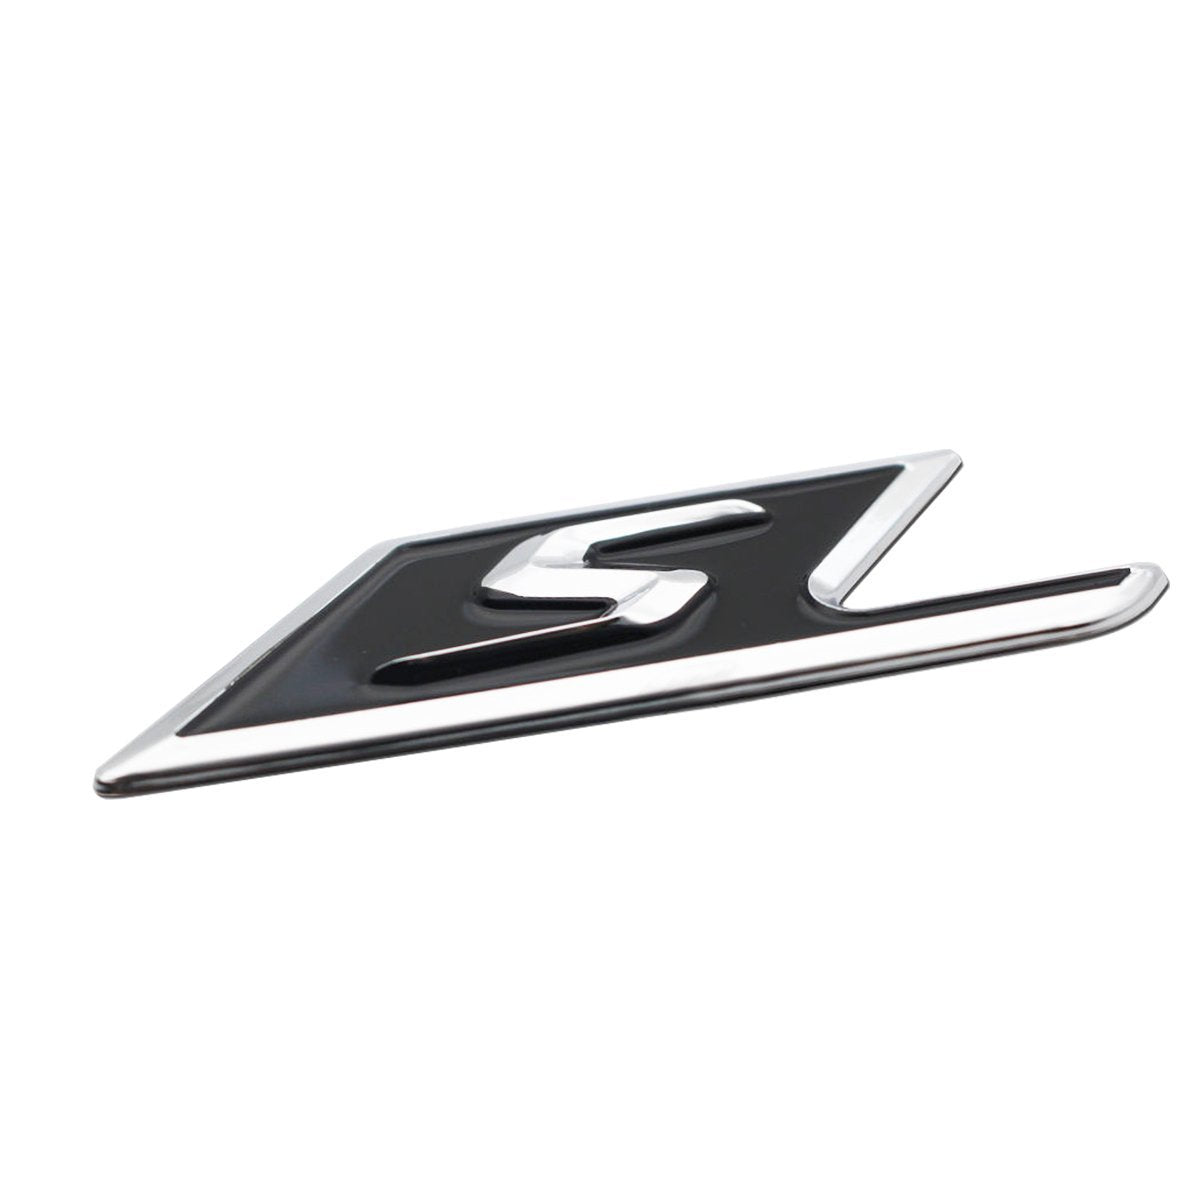 3D Chrome S Logo Car Rear Trunk Lid Emblem Sticker For Mercedes Benz A